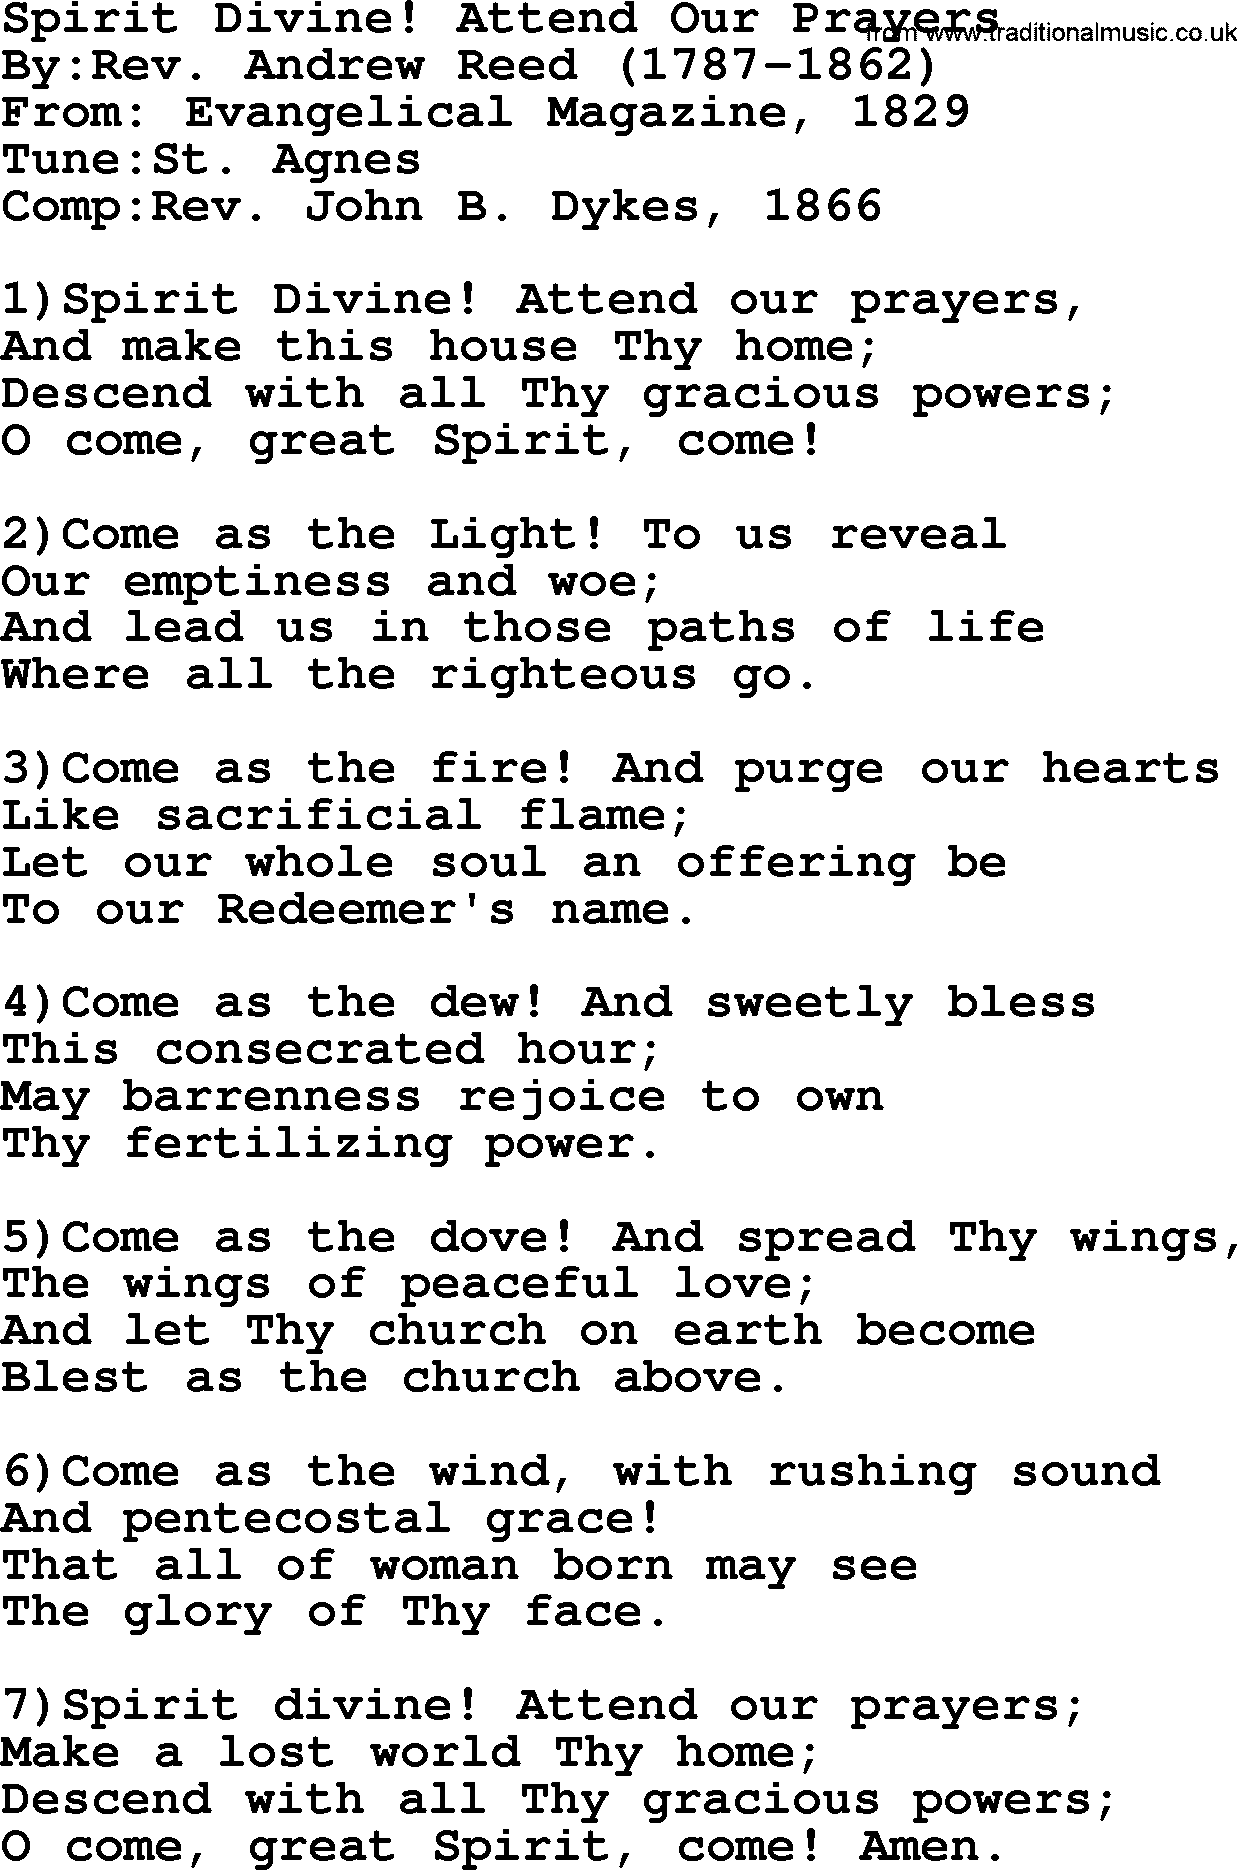 Methodist Hymn: Spirit Divine! Attend Our Prayers, lyrics